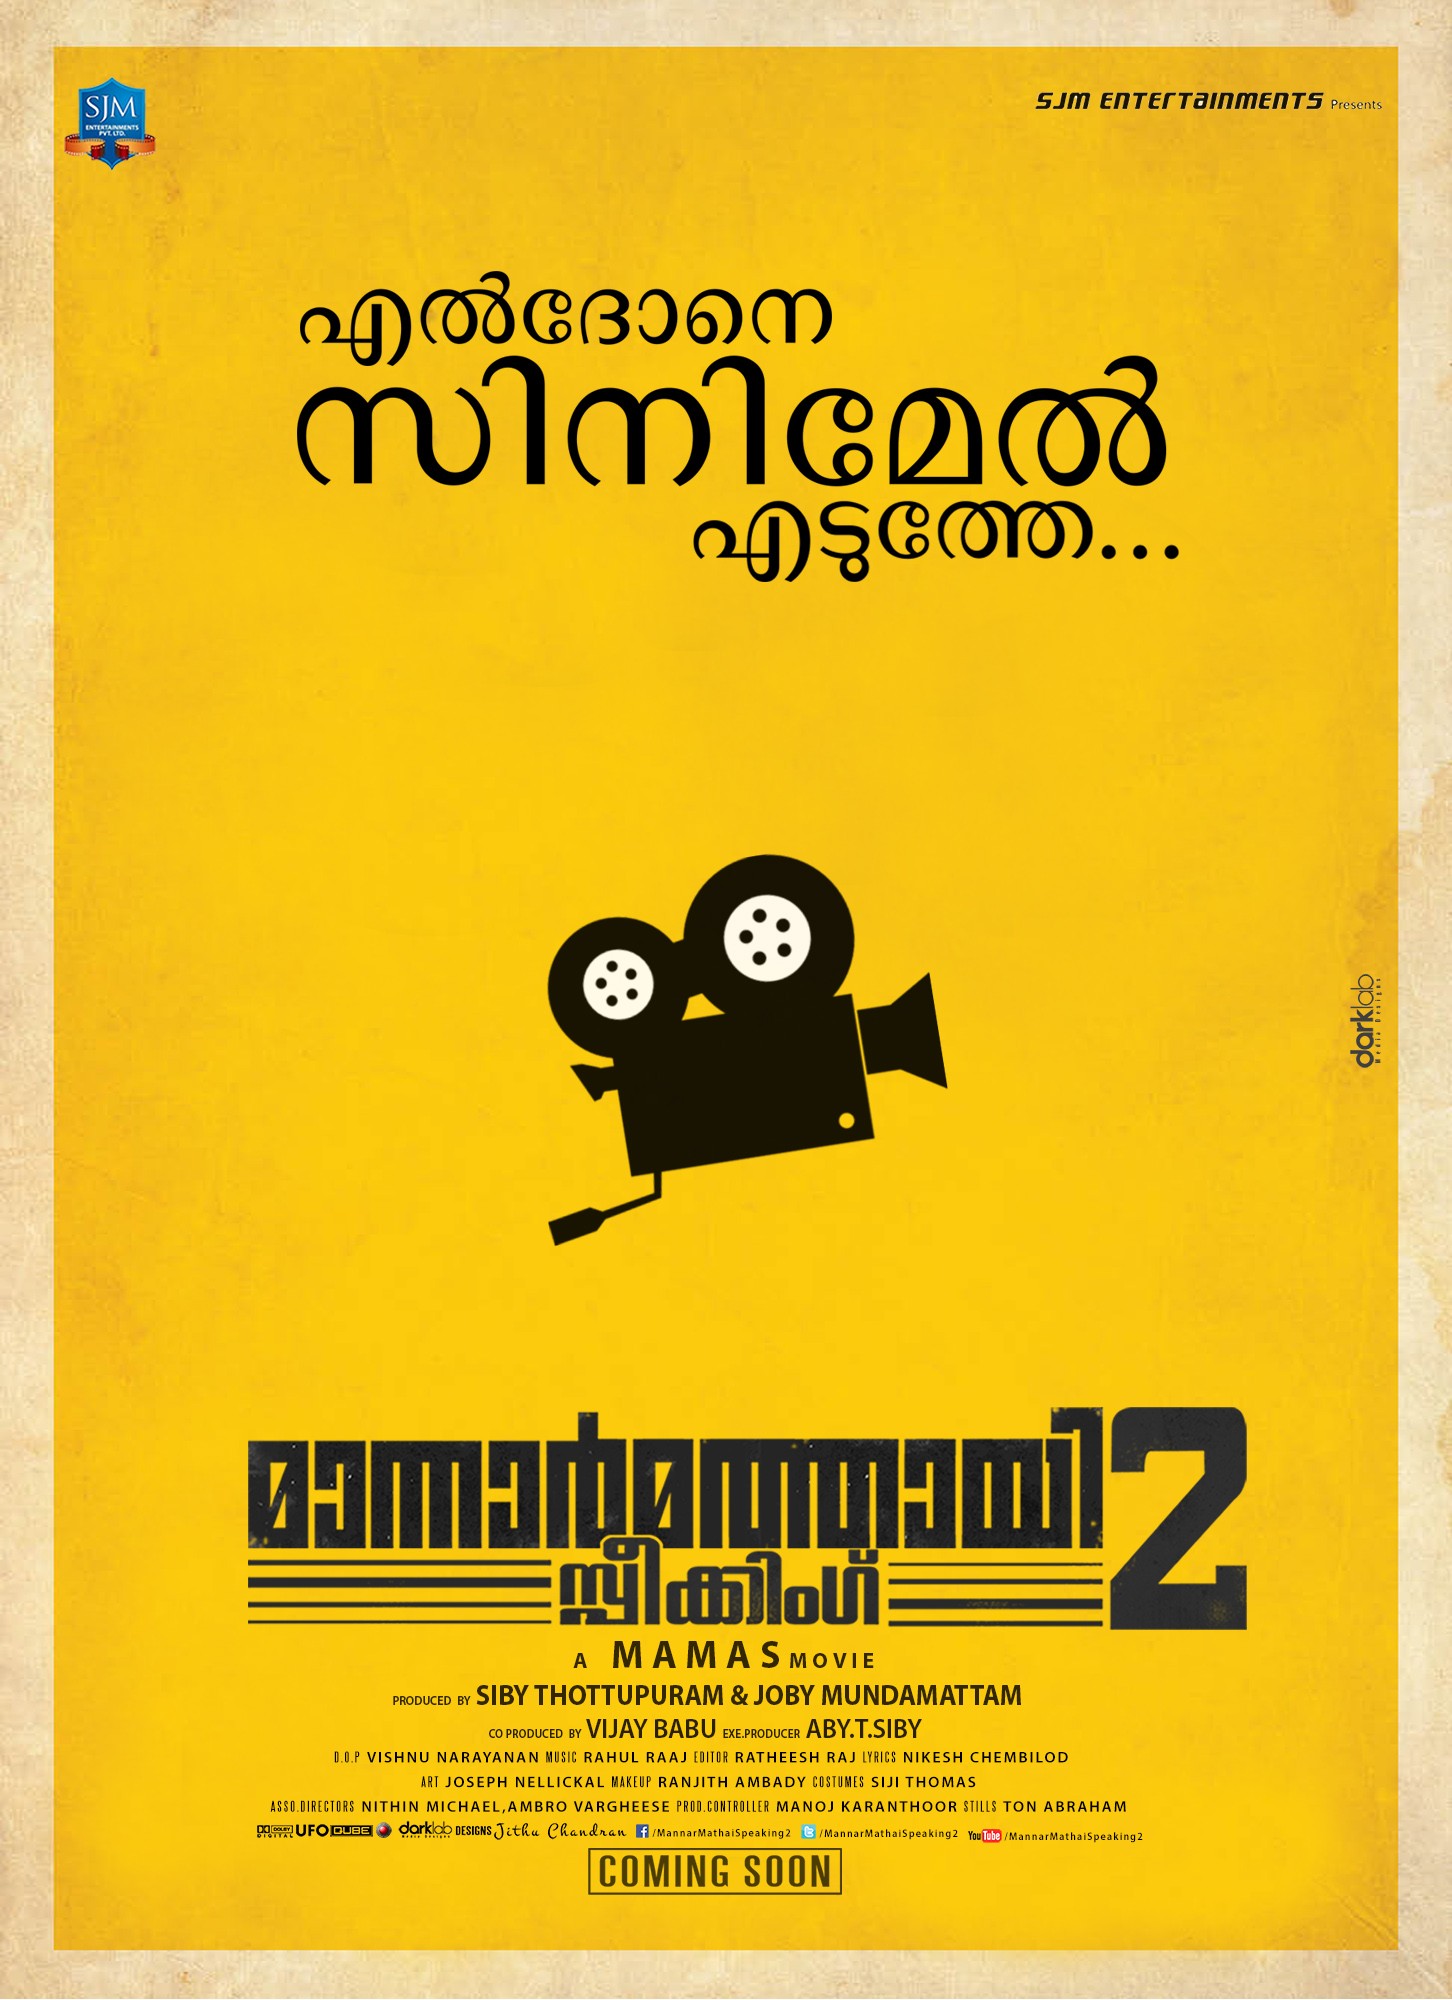 Mega Sized Movie Poster Image for Mannar Mathai Speaking 2 (#6 of 29)